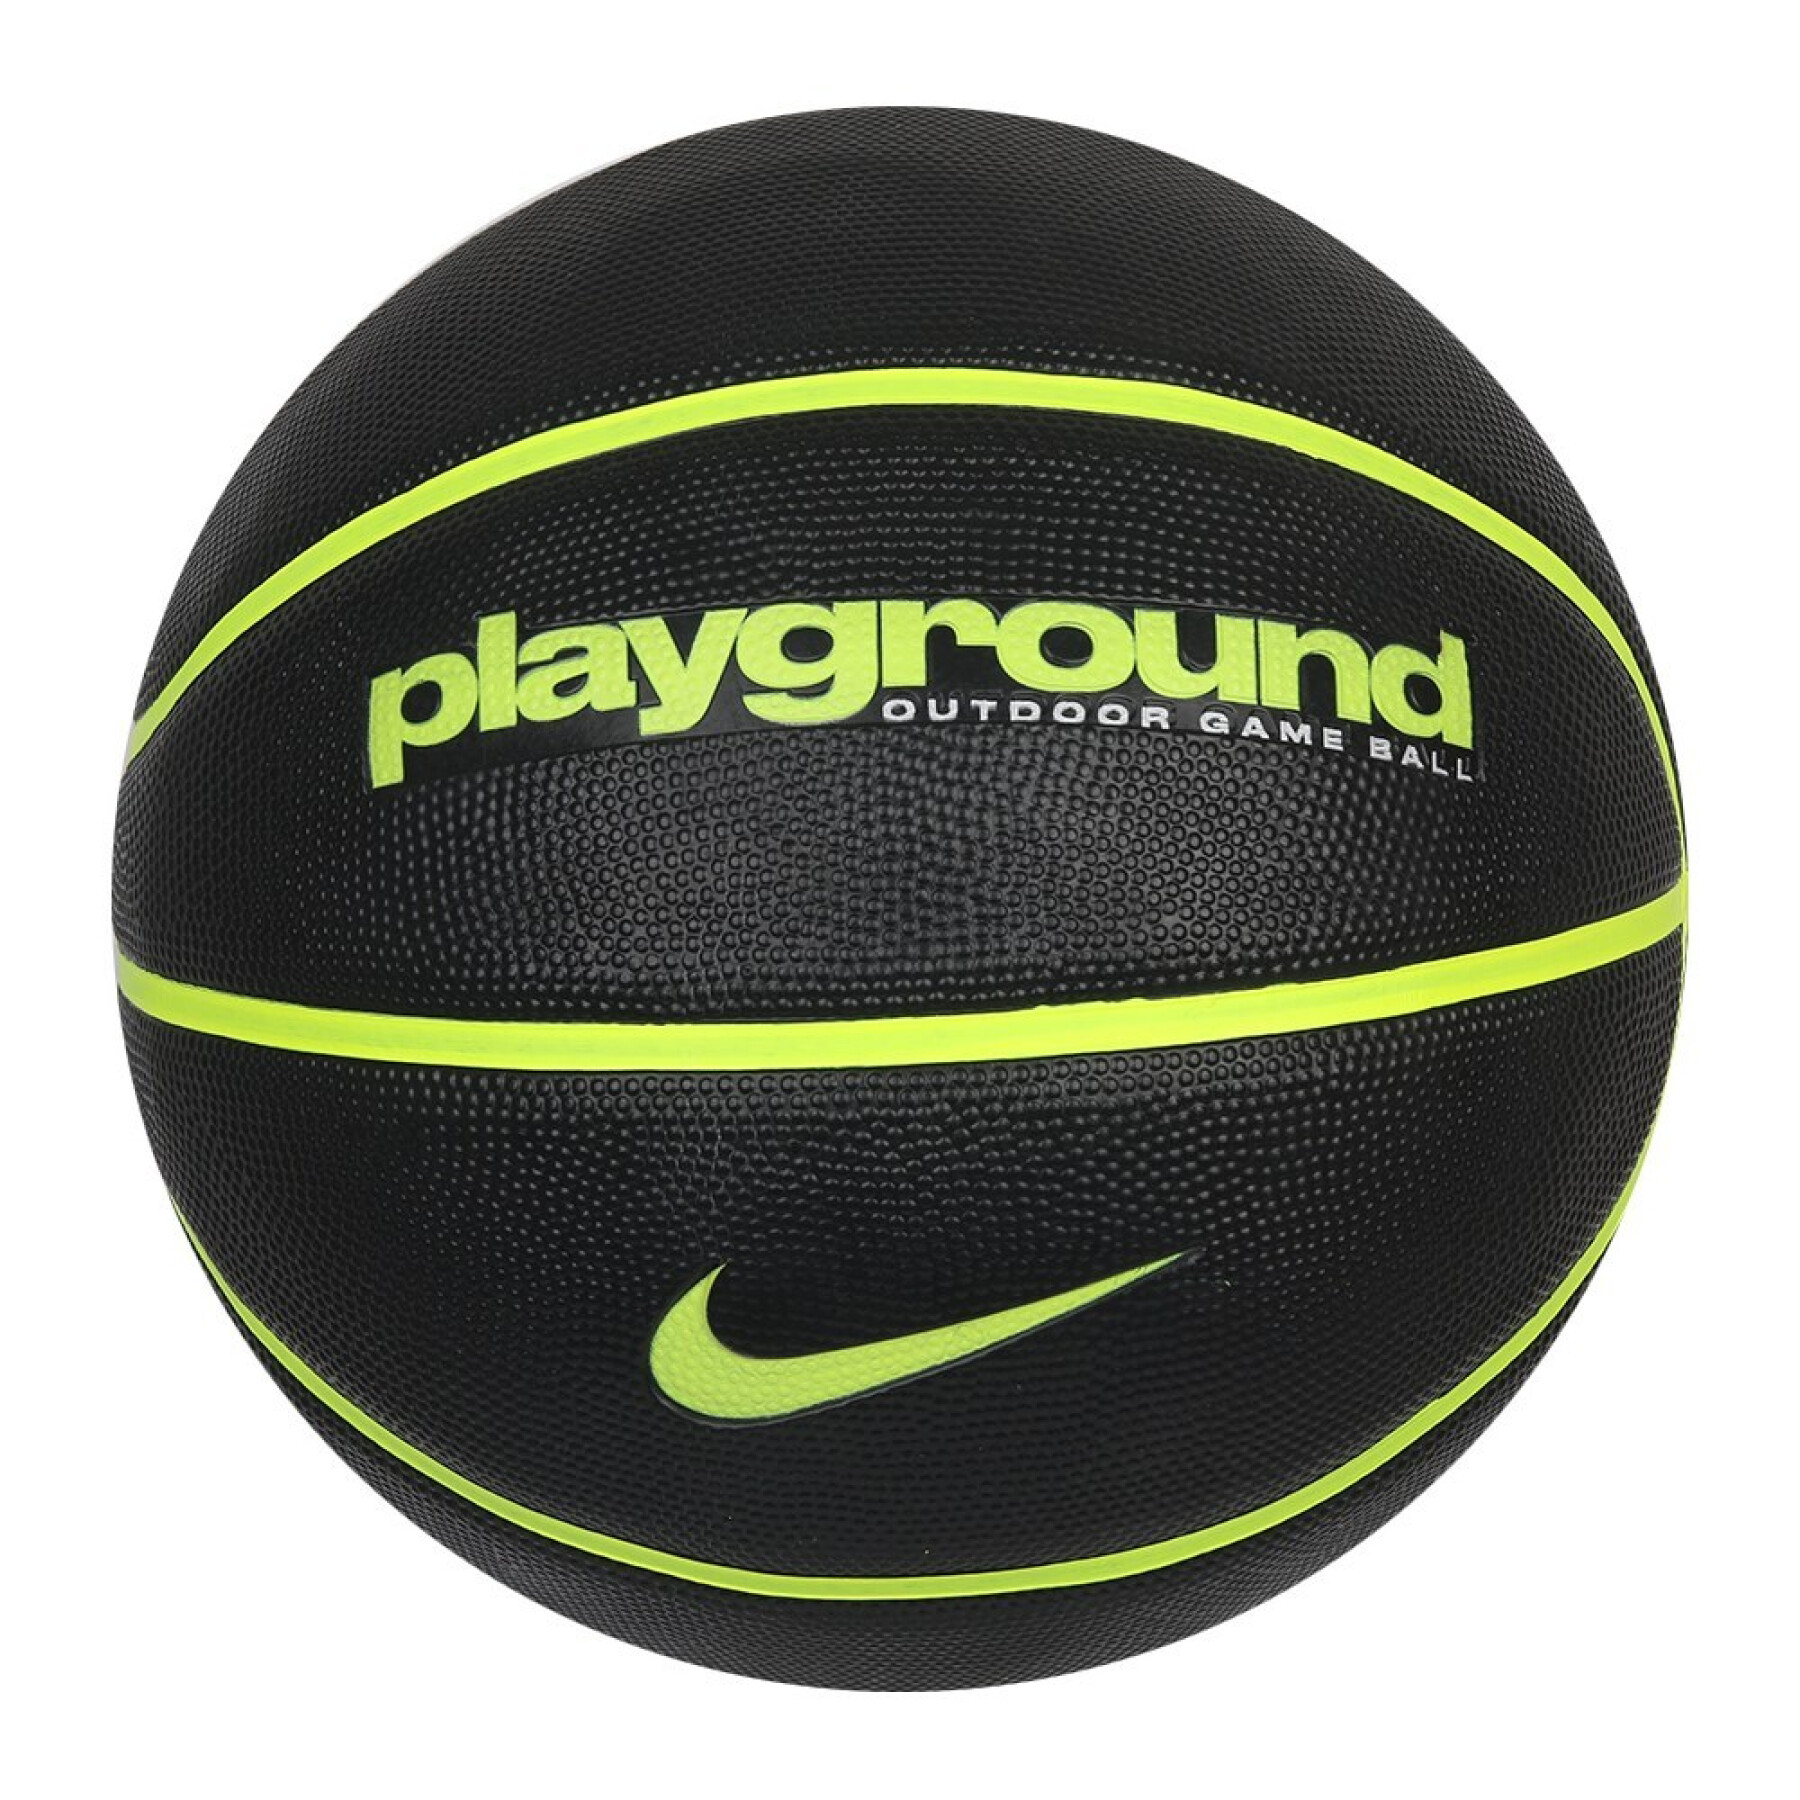 Balão Nike Everyday Playground 8P Deflated